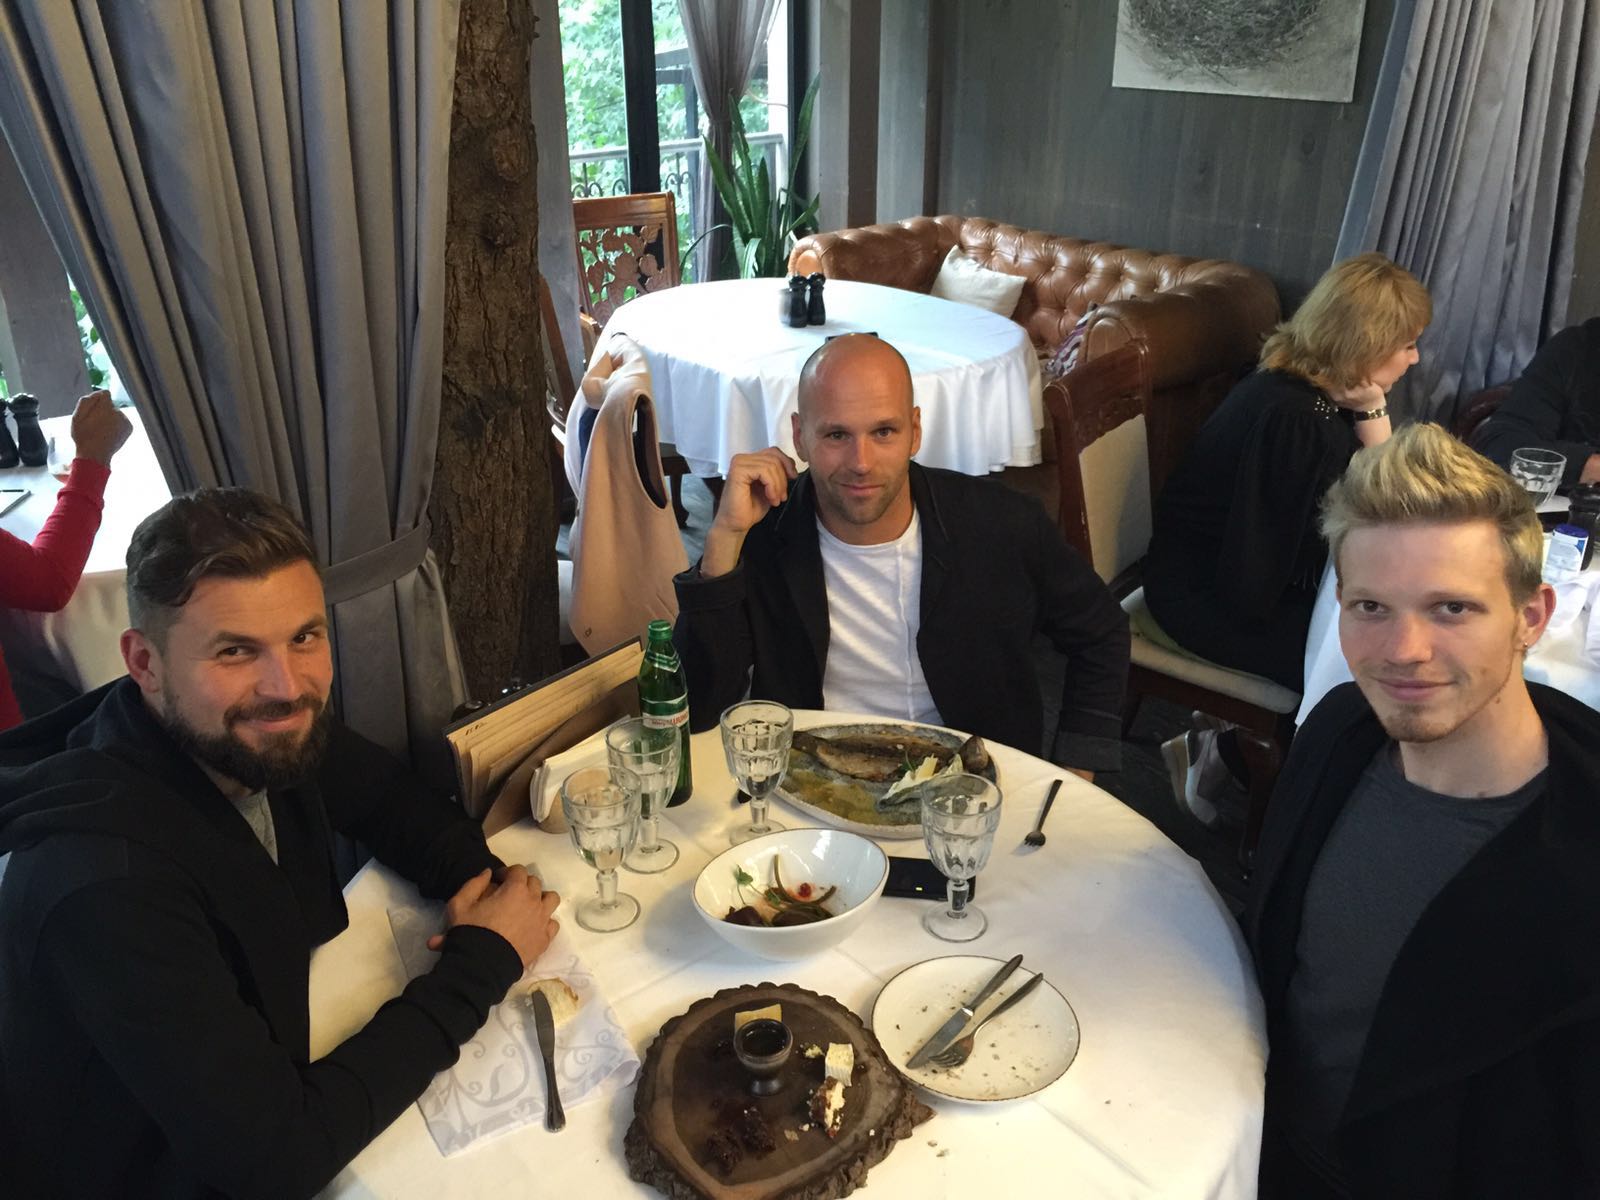 Peter Santenello, John Uke and their friend in Kyiv, Ukraine